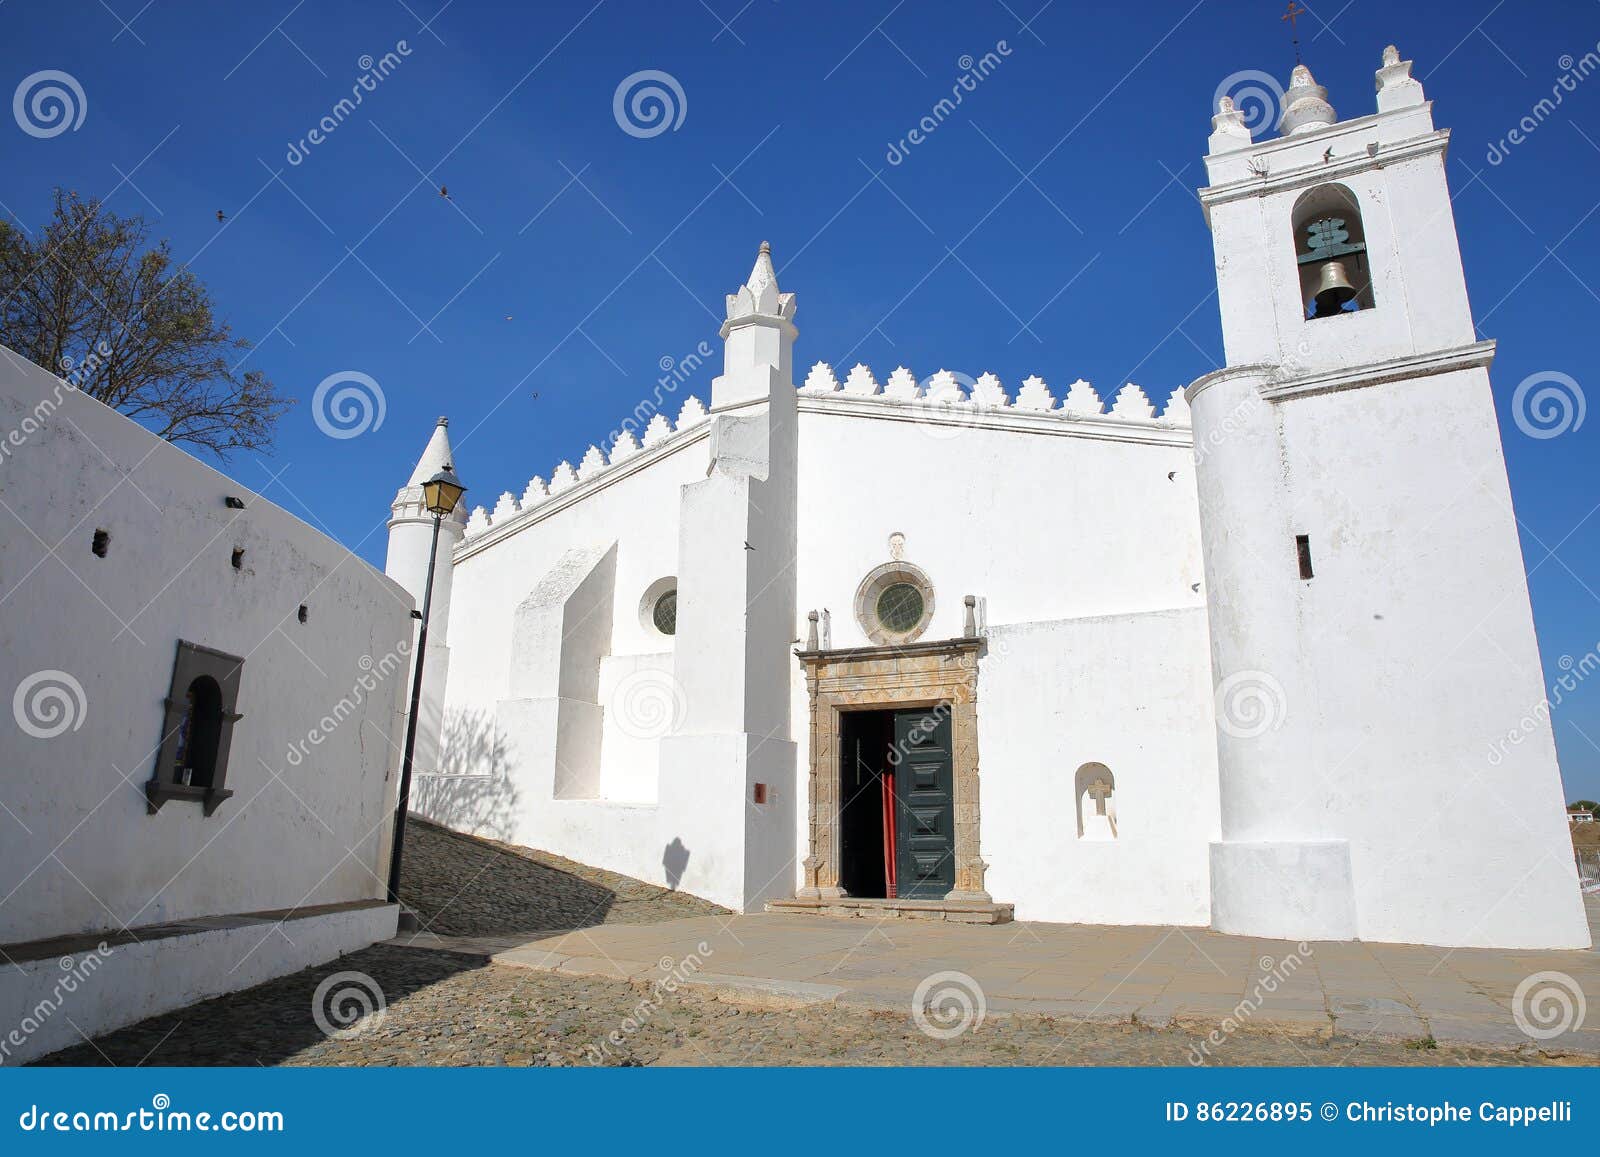 mertola, portugal: the matriz church former mosque of mertola